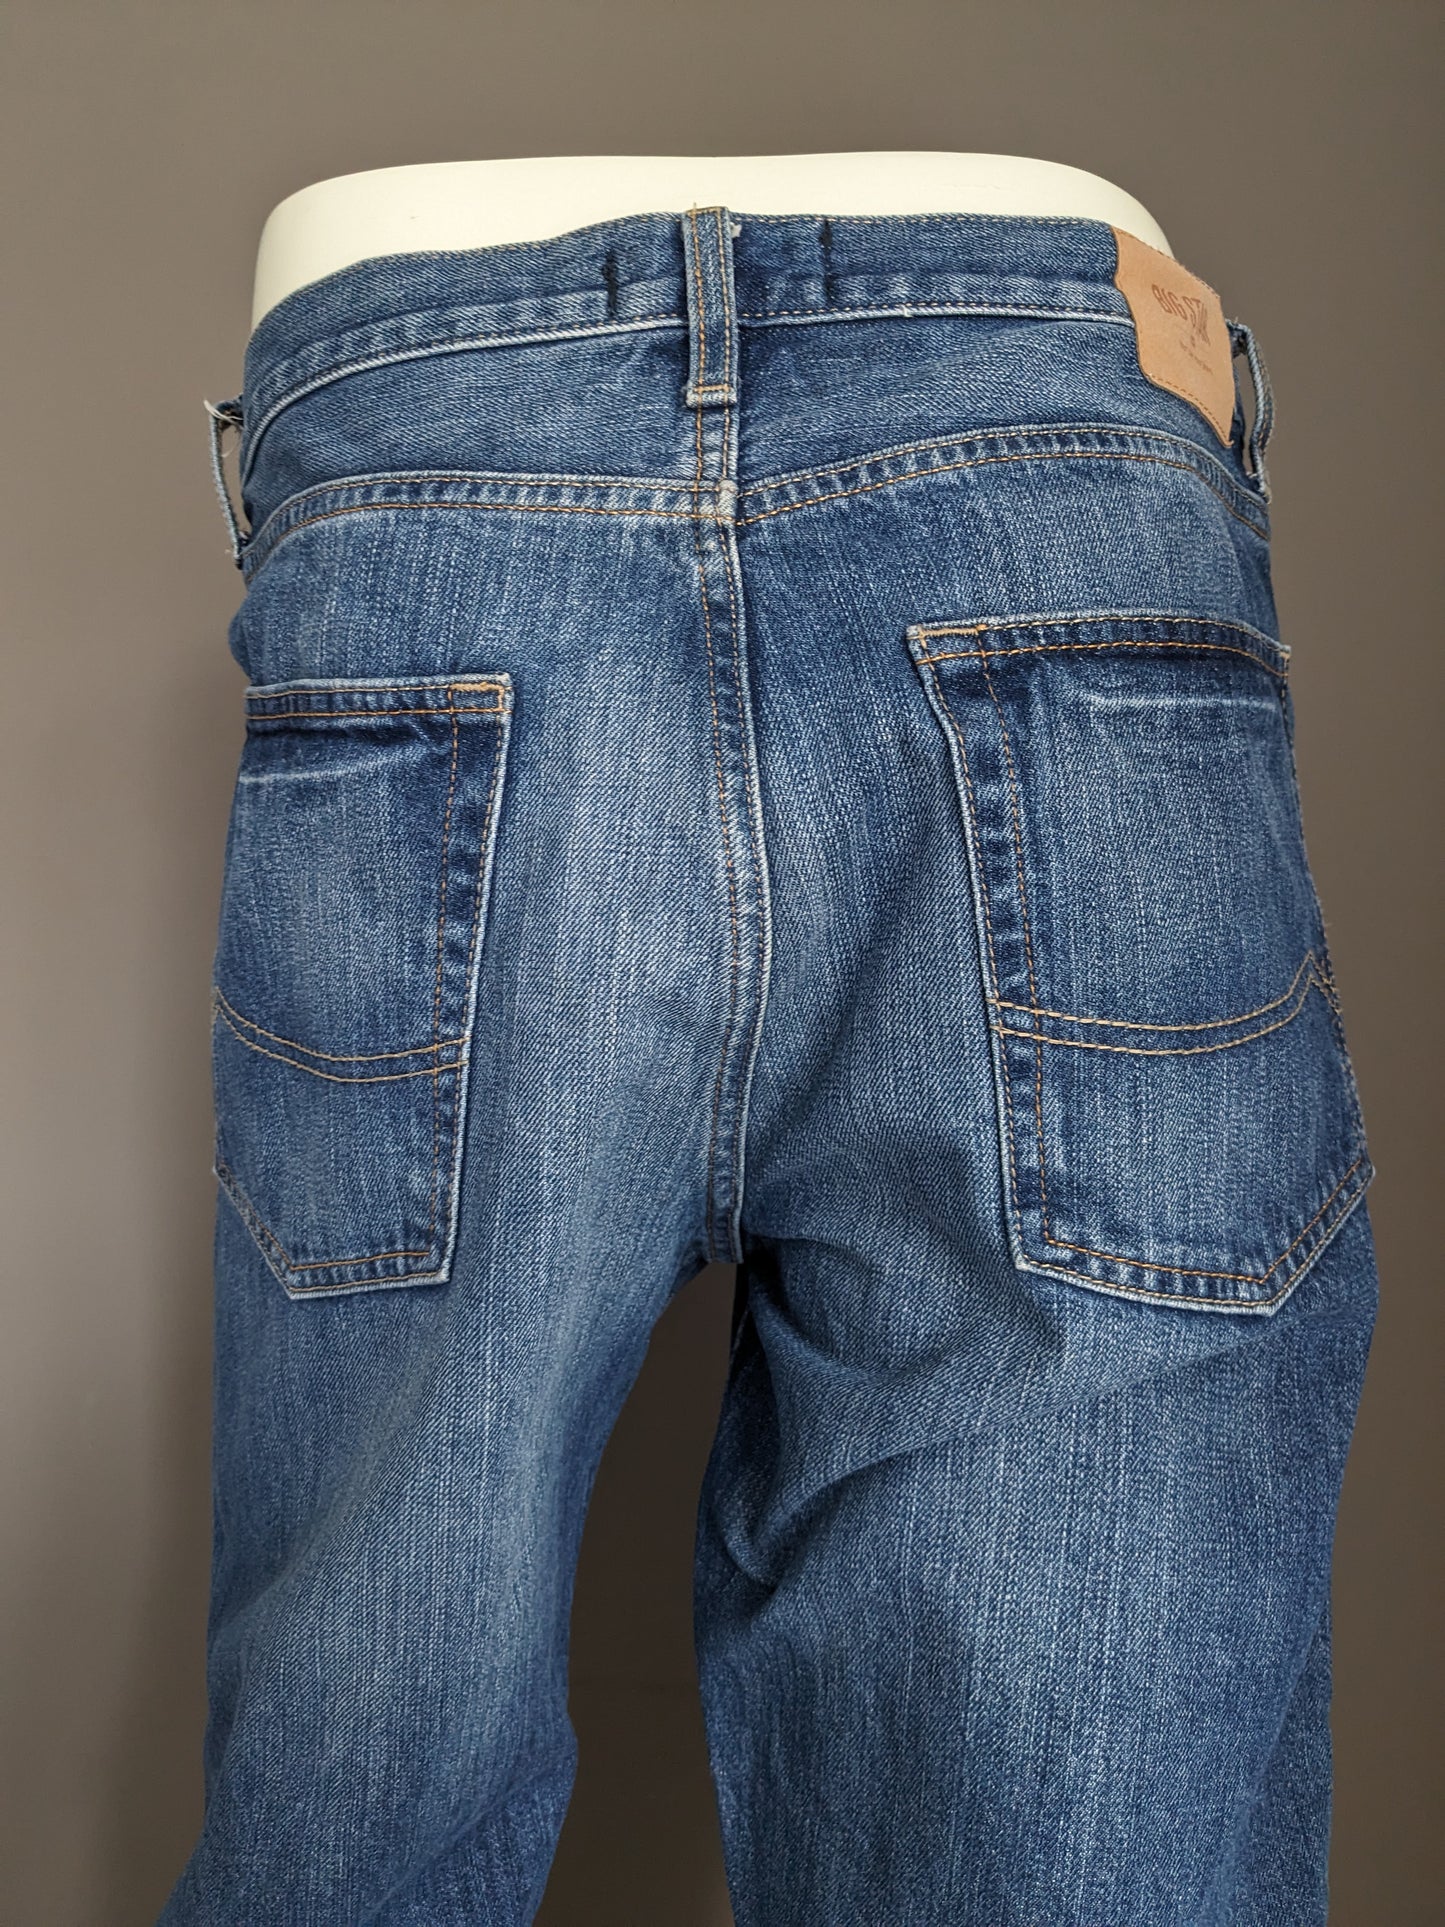 Big Star Jeans. Blue colored. Type Rogar. Regular fit. Size W36 - L32.